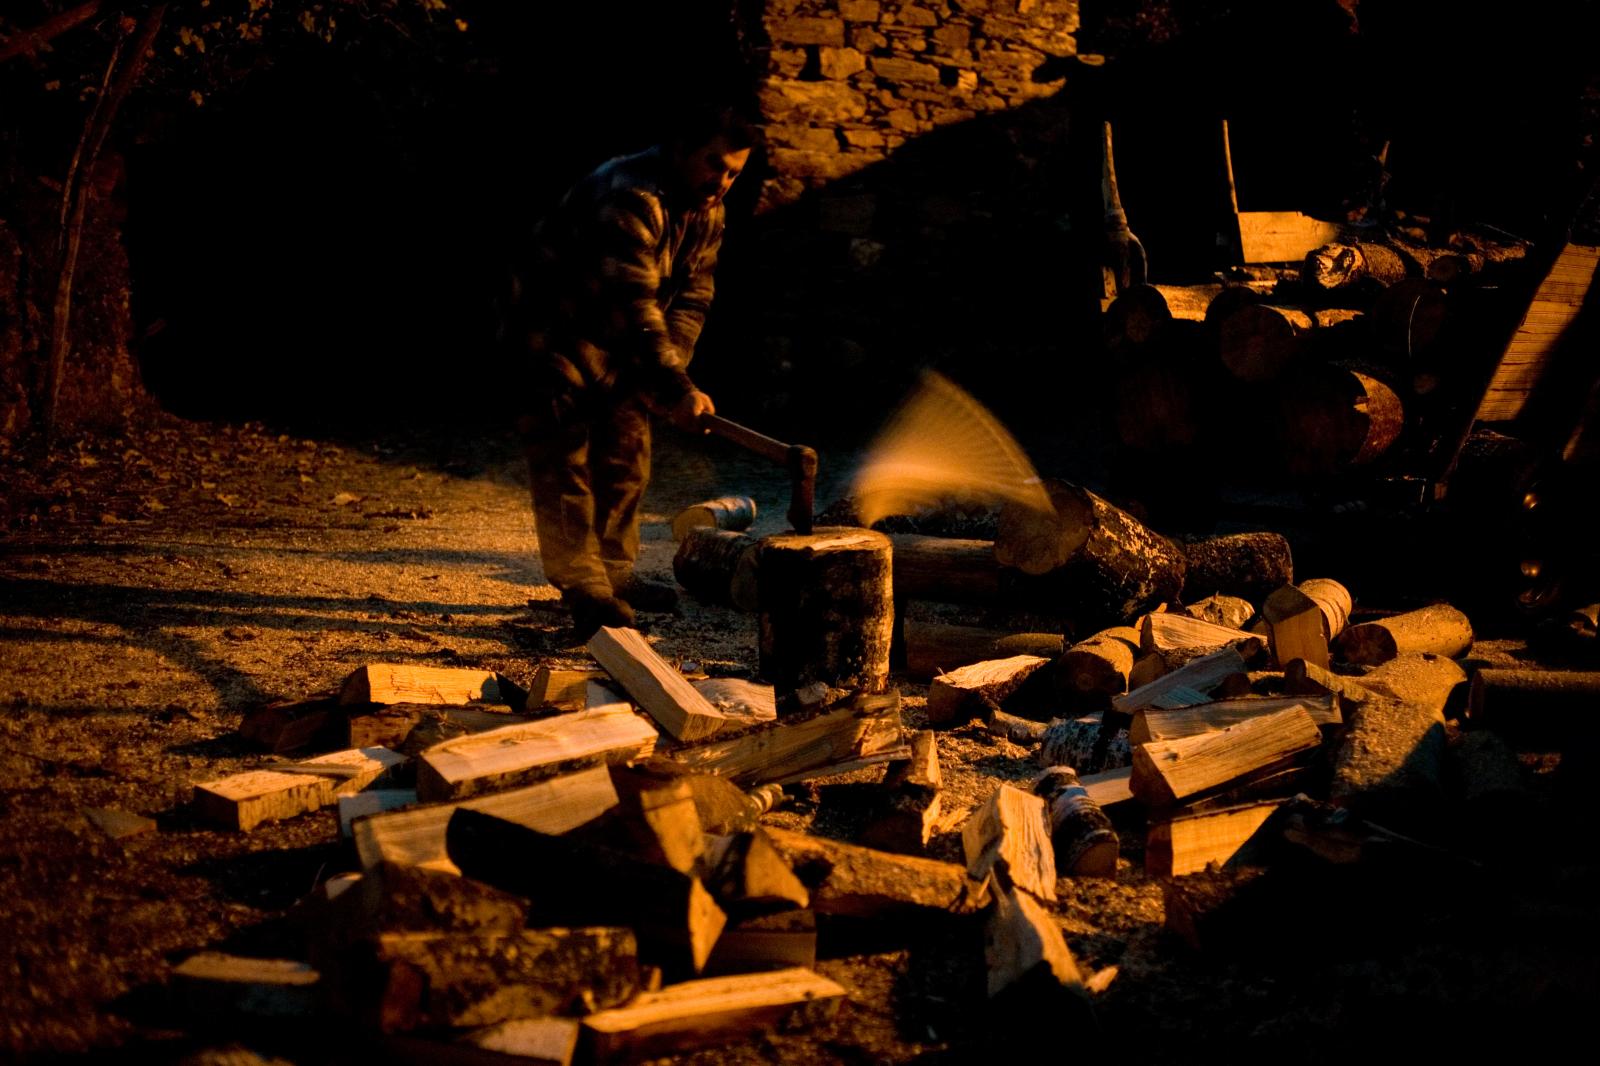 Alfredo Brito, one of the inhabitants chopping wood at night.